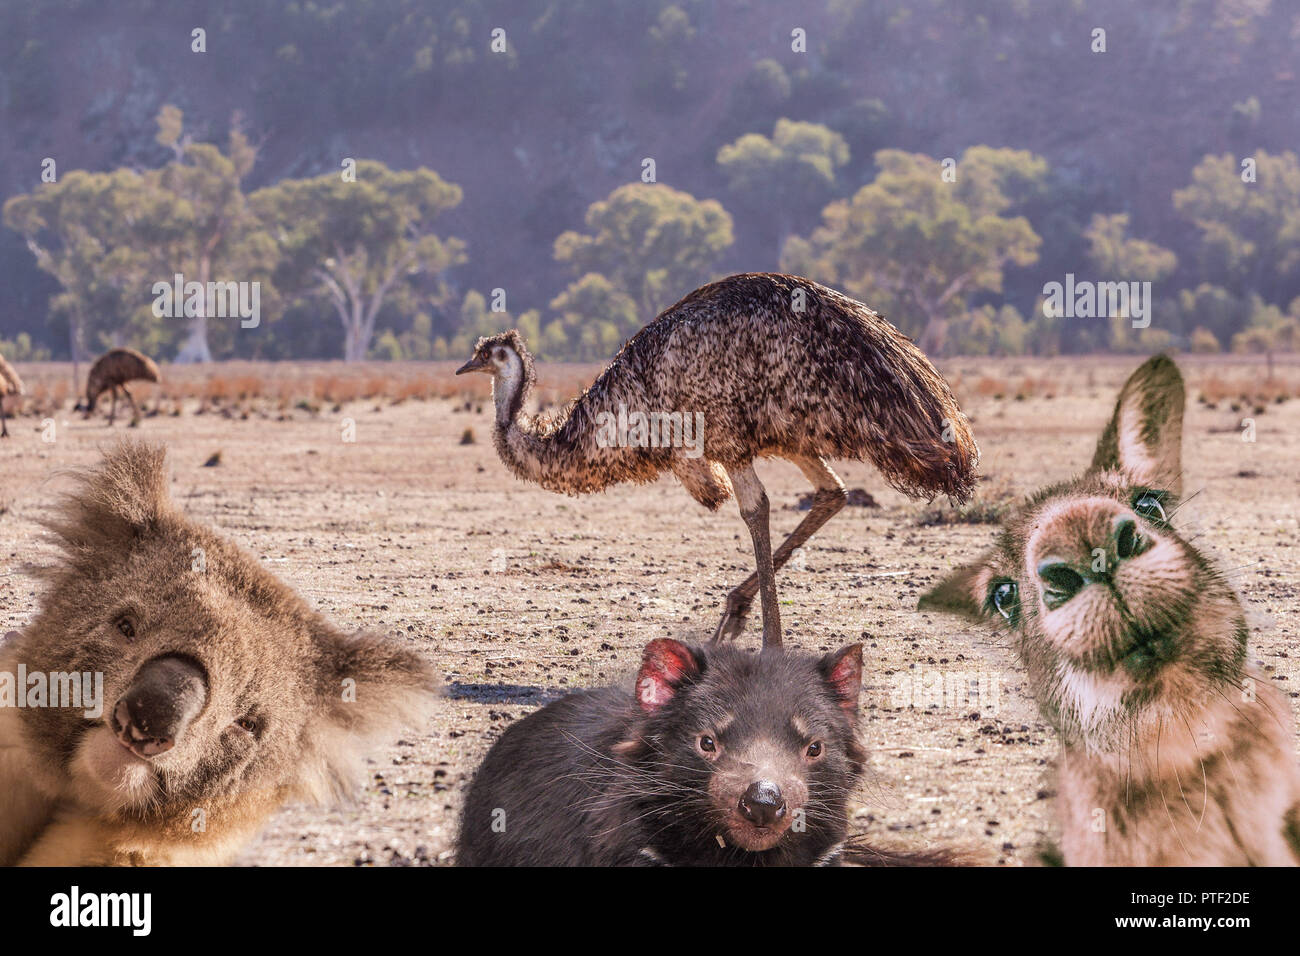 Comic collage of Australian native animals - emu, koala, Tasmanian devil, and kangaroo portraits Stock Photo